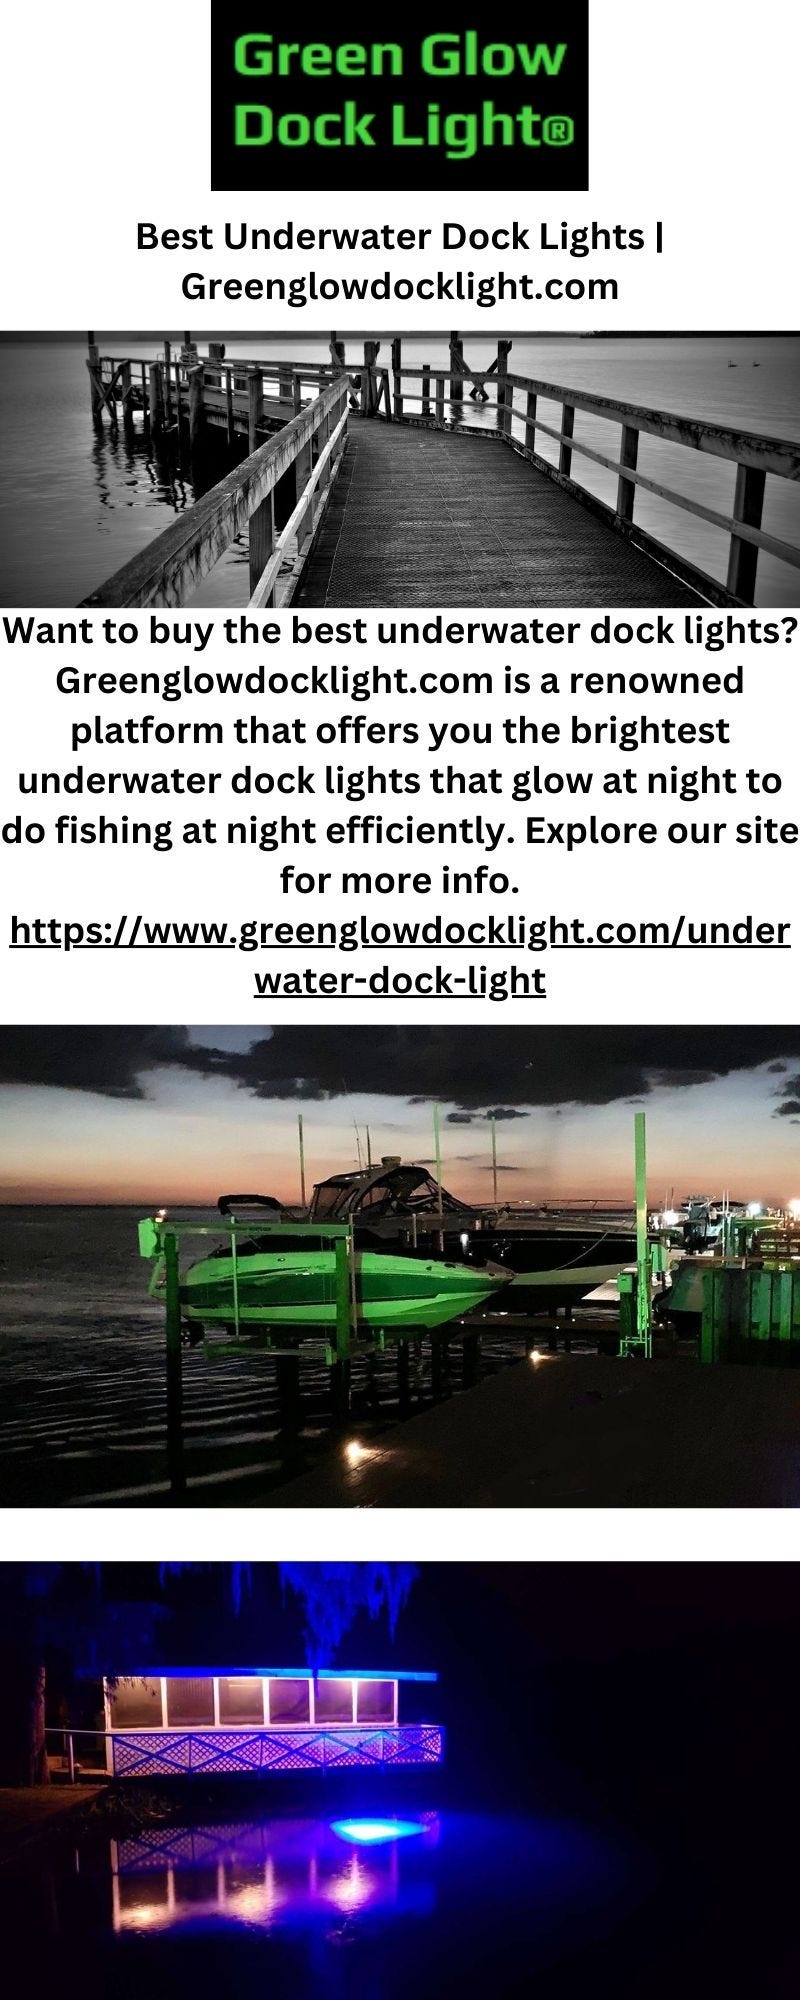 Best Underwater Dock Lights  Greenglowdocklight.com - Green Glow Dock  Light LLC - Medium